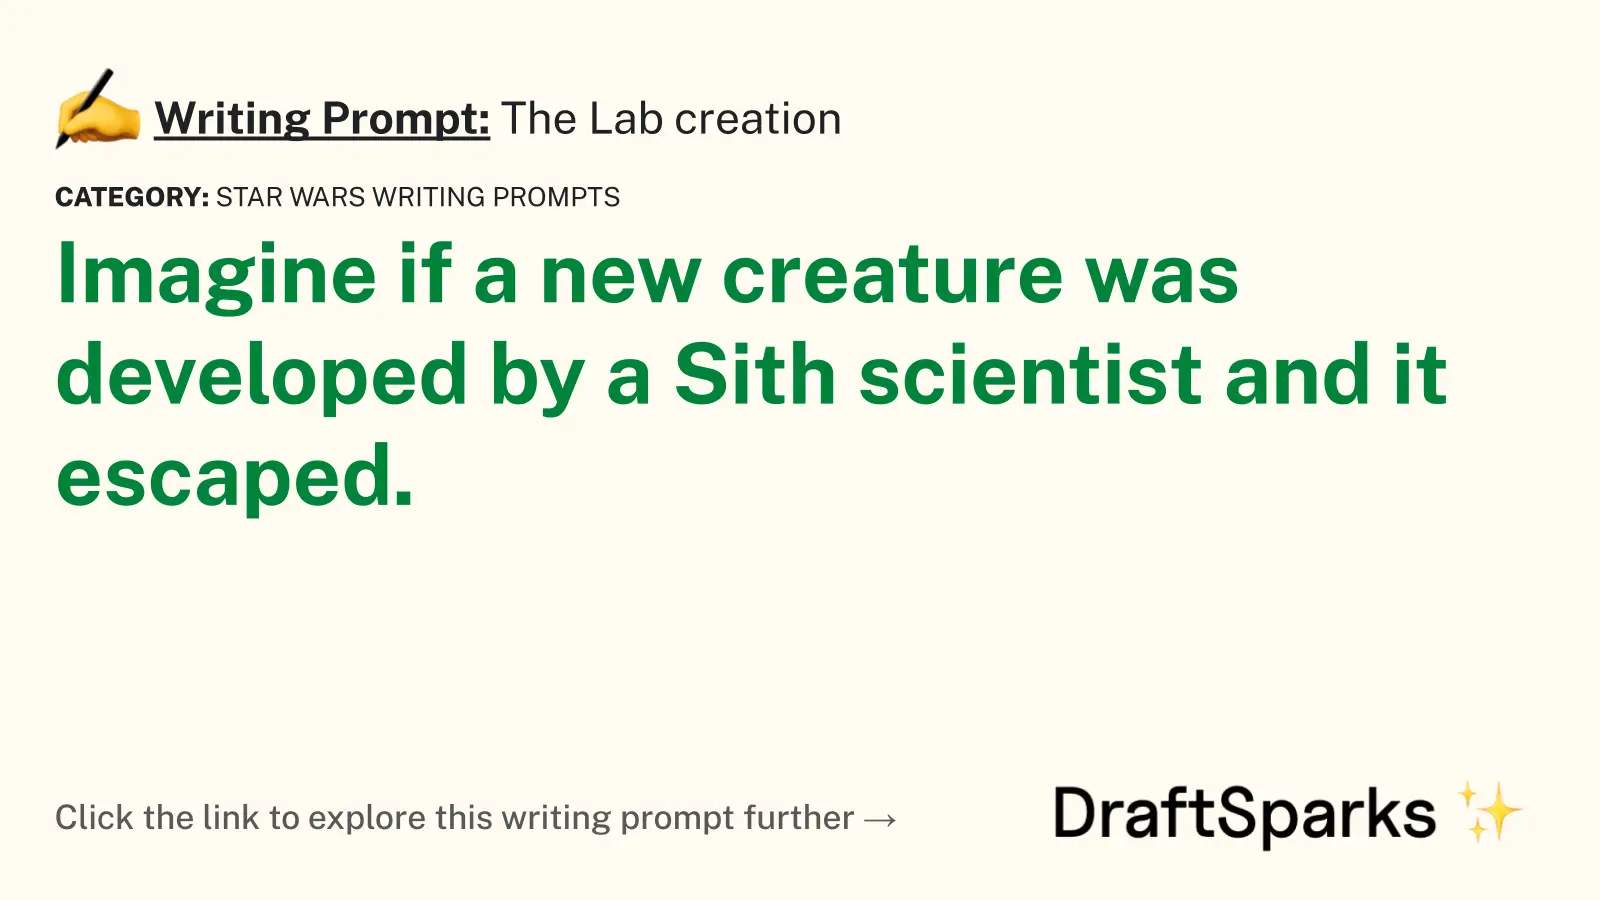 The Lab creation